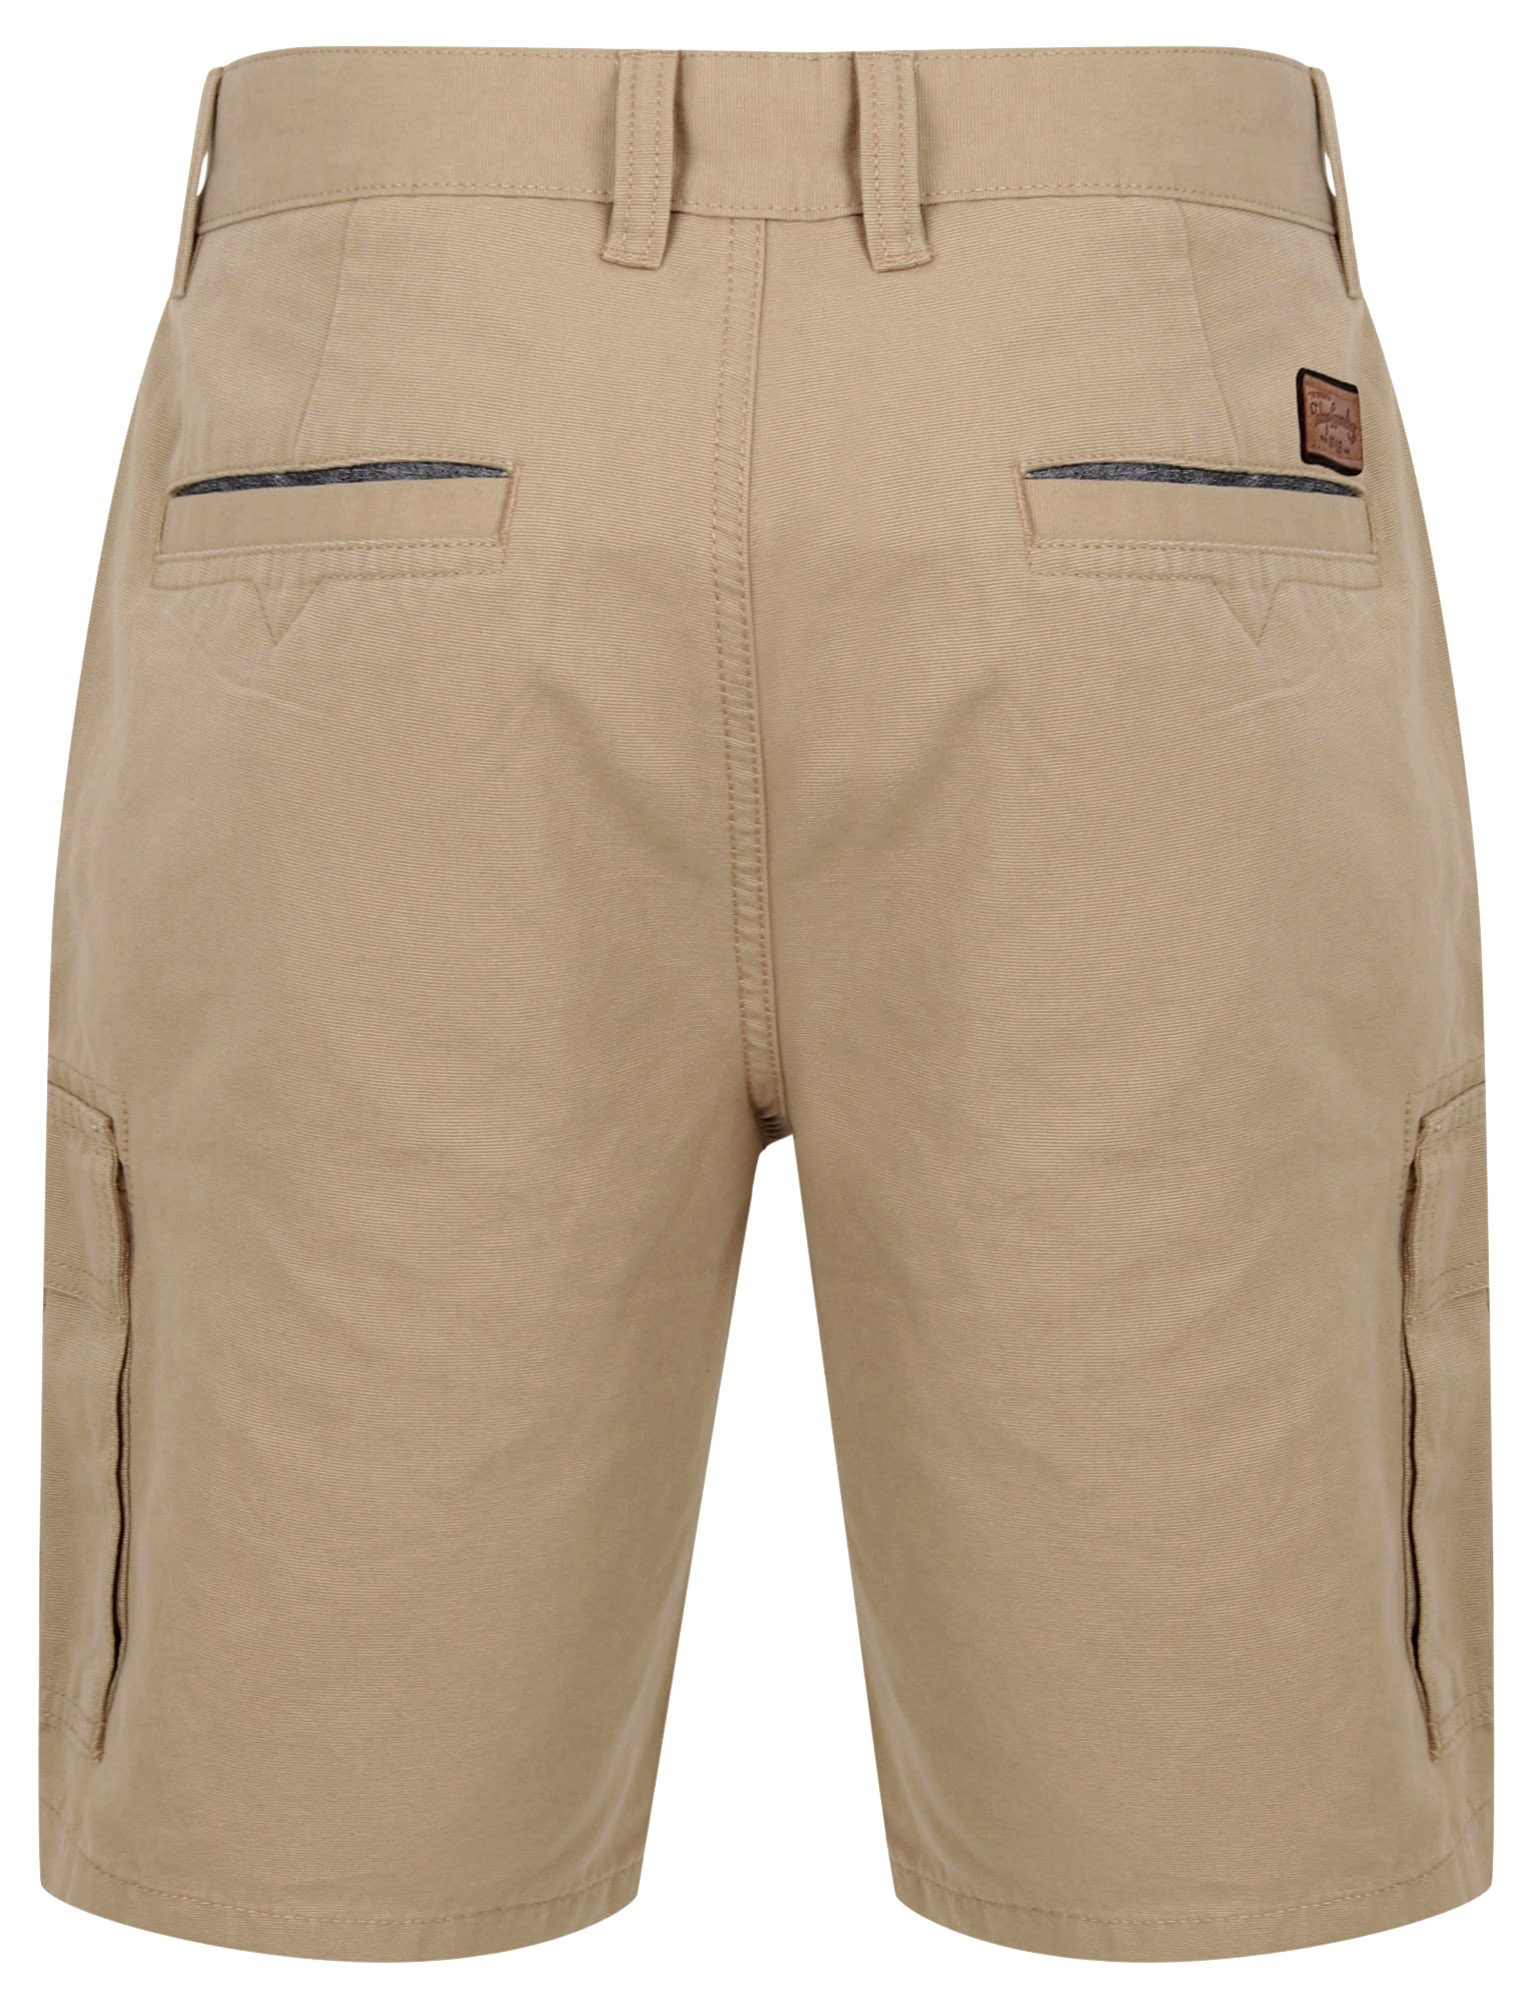 Tokyo Laundry Men's Kordi Cargo Shorts Chino Combat Multi-Pocket Size S - XXL | eBay